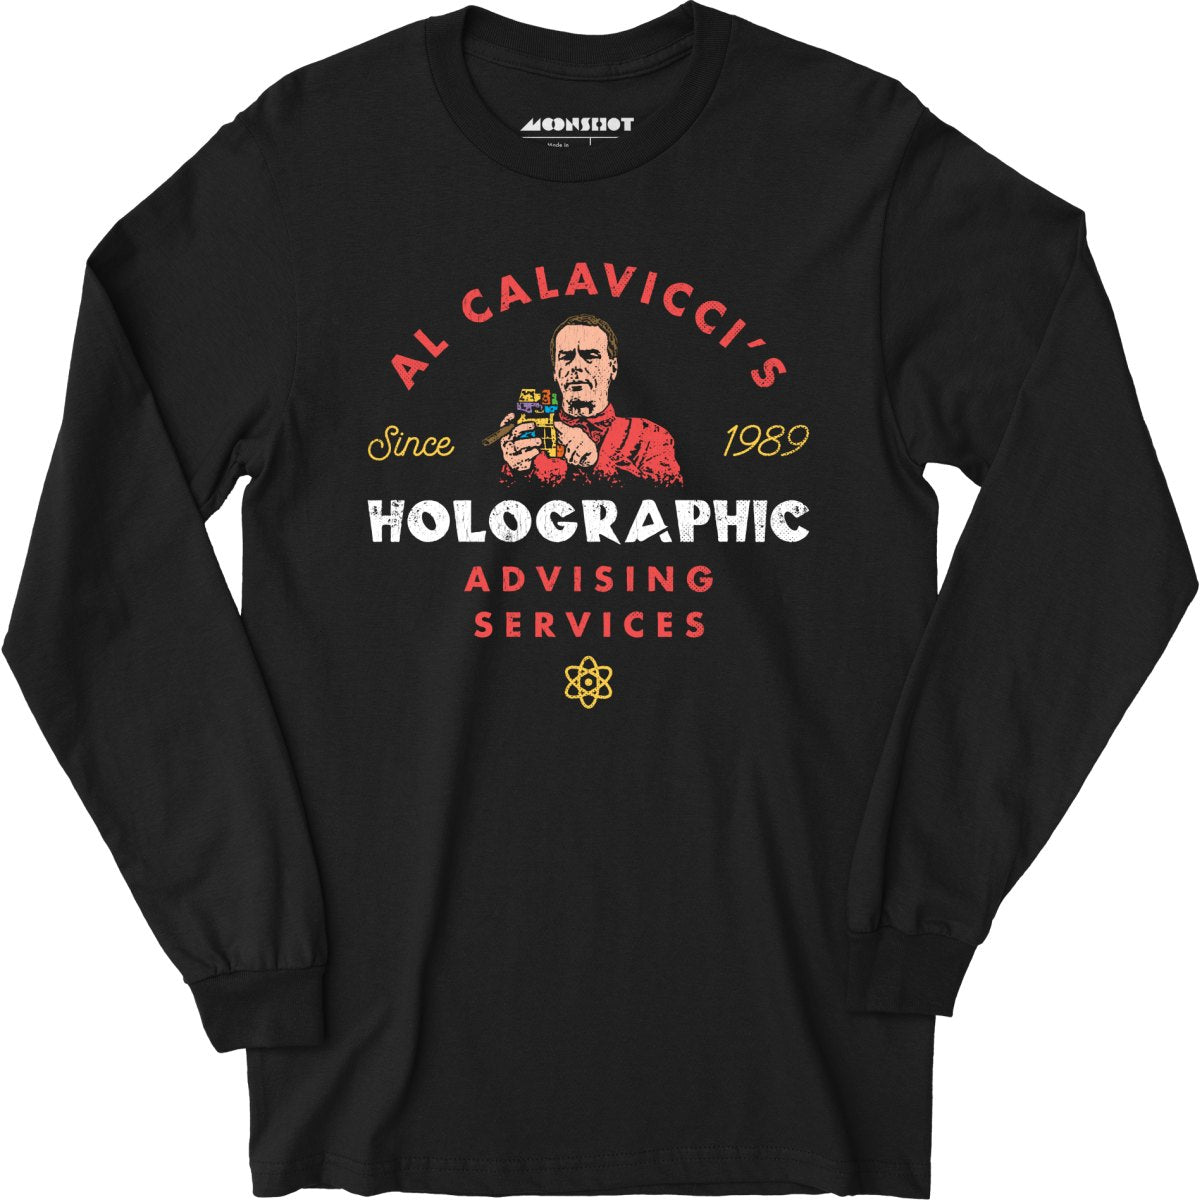 Al Calavicci's Holographic Advising Services - Long Sleeve T-Shirt